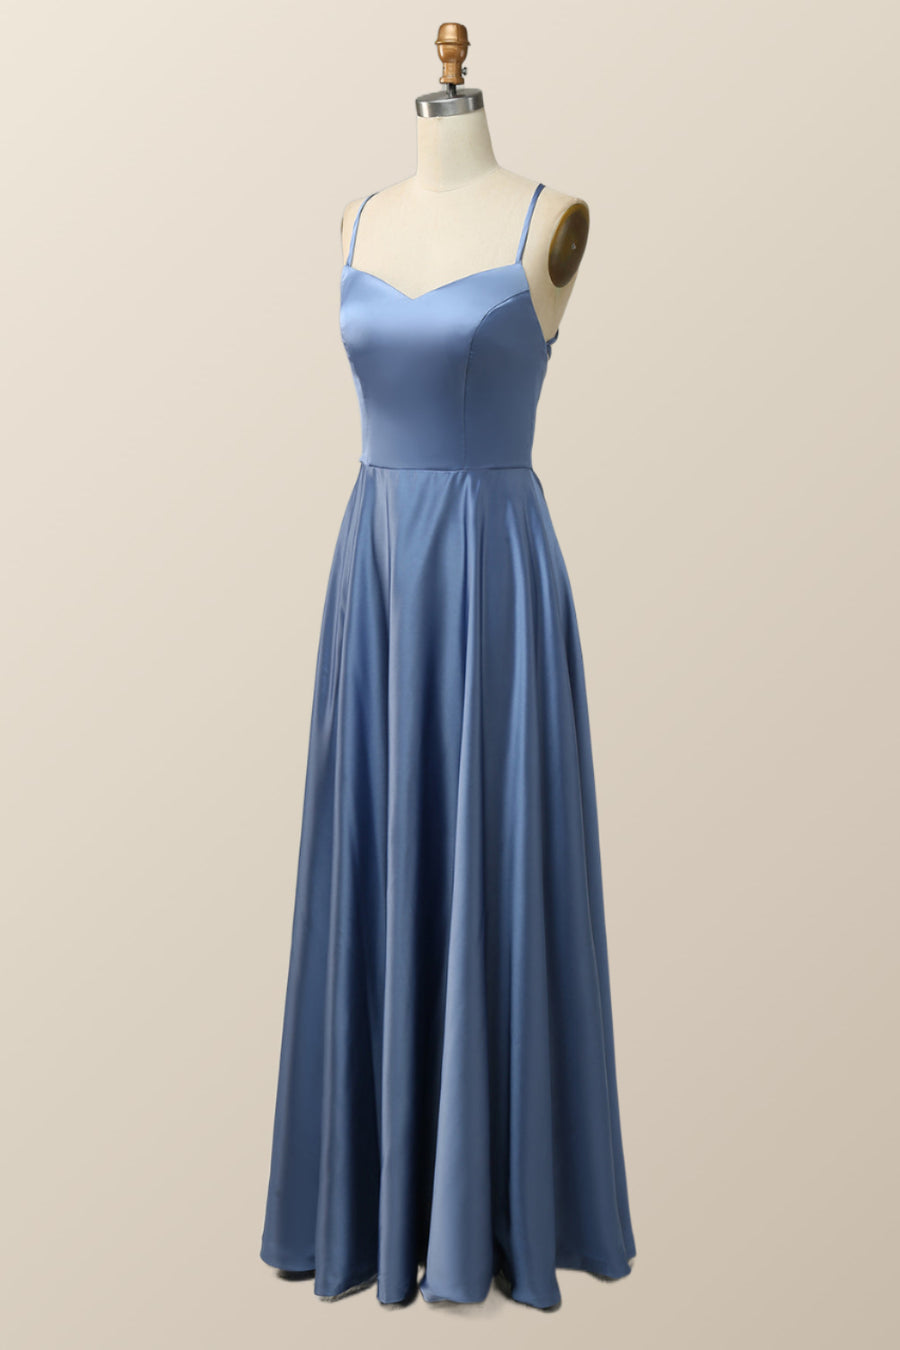 Simply Blue Straps A-line Long Formal Dress